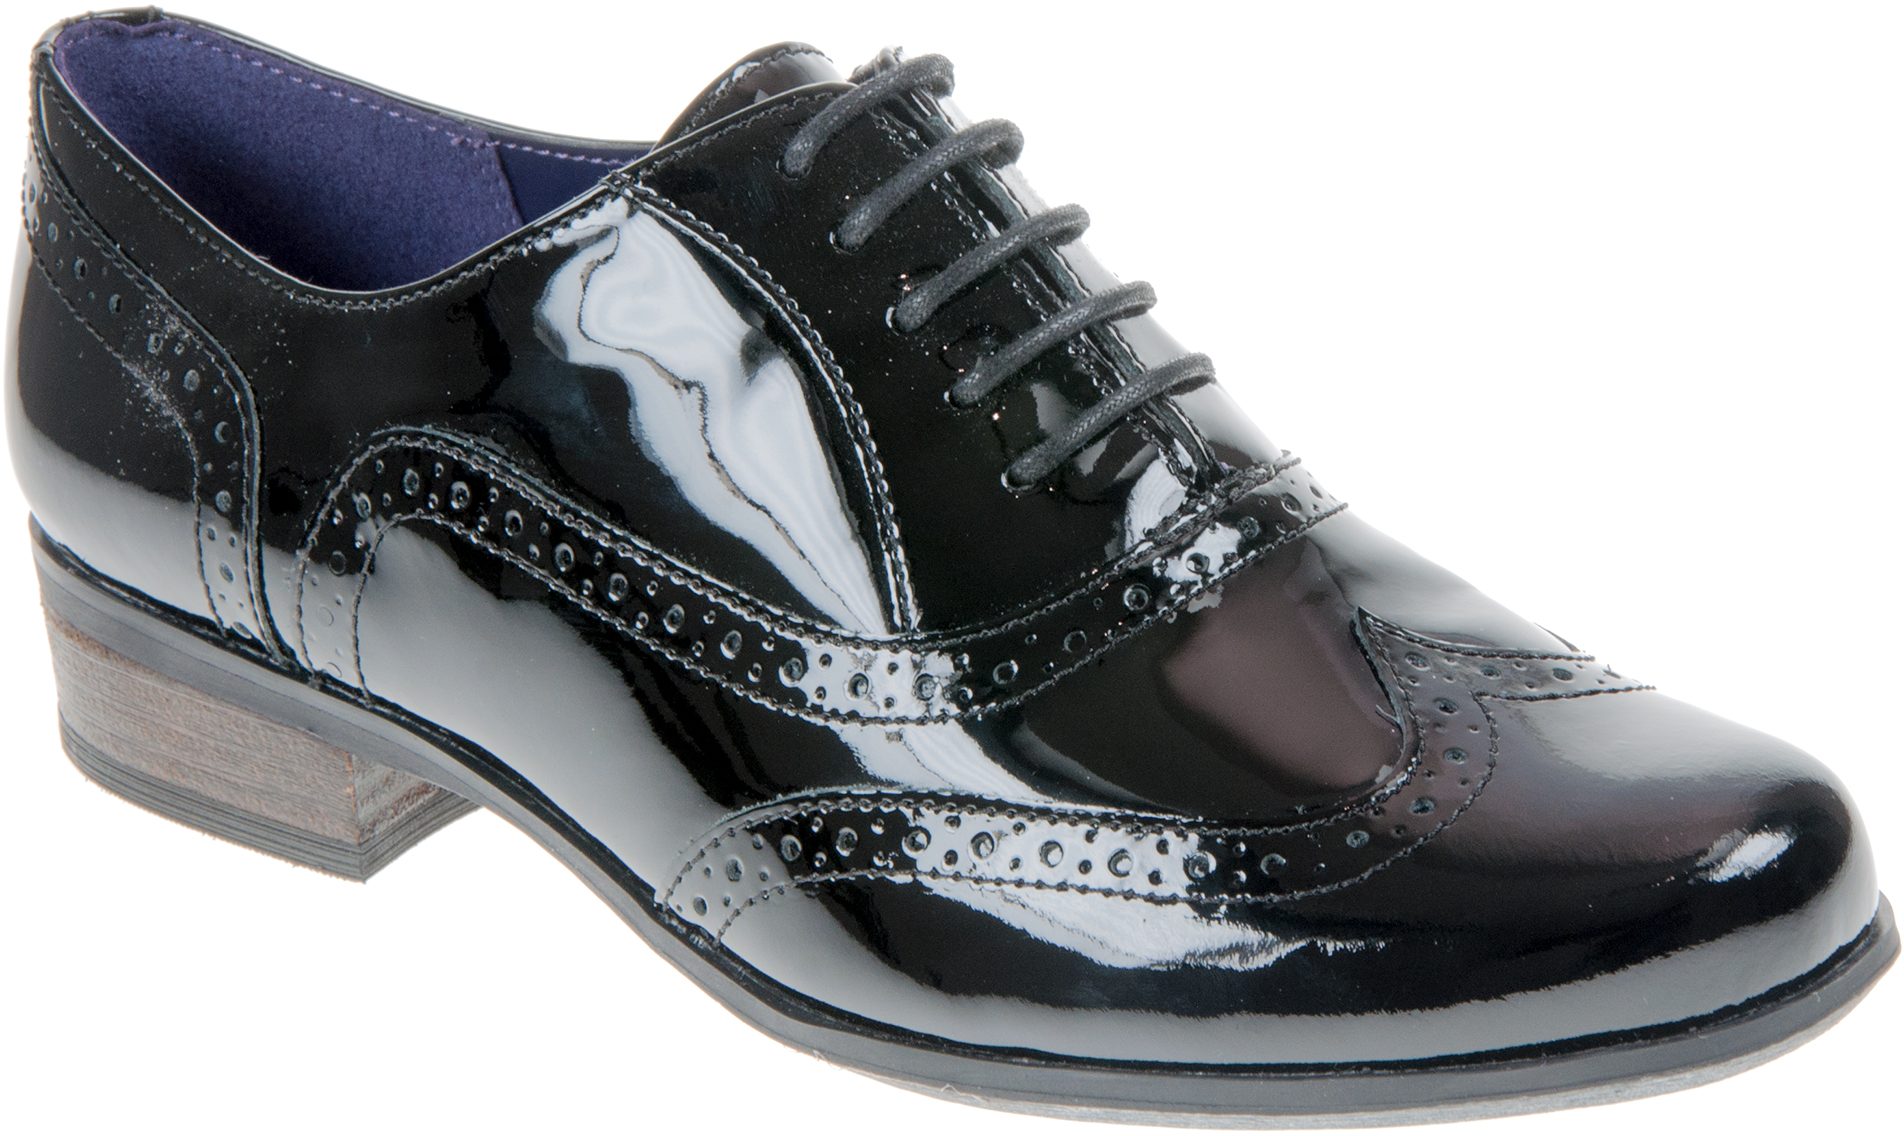 Clarks Hamble Oak Black Patent Leather Brogue Style Lace Up Shoes D & E Fittings 